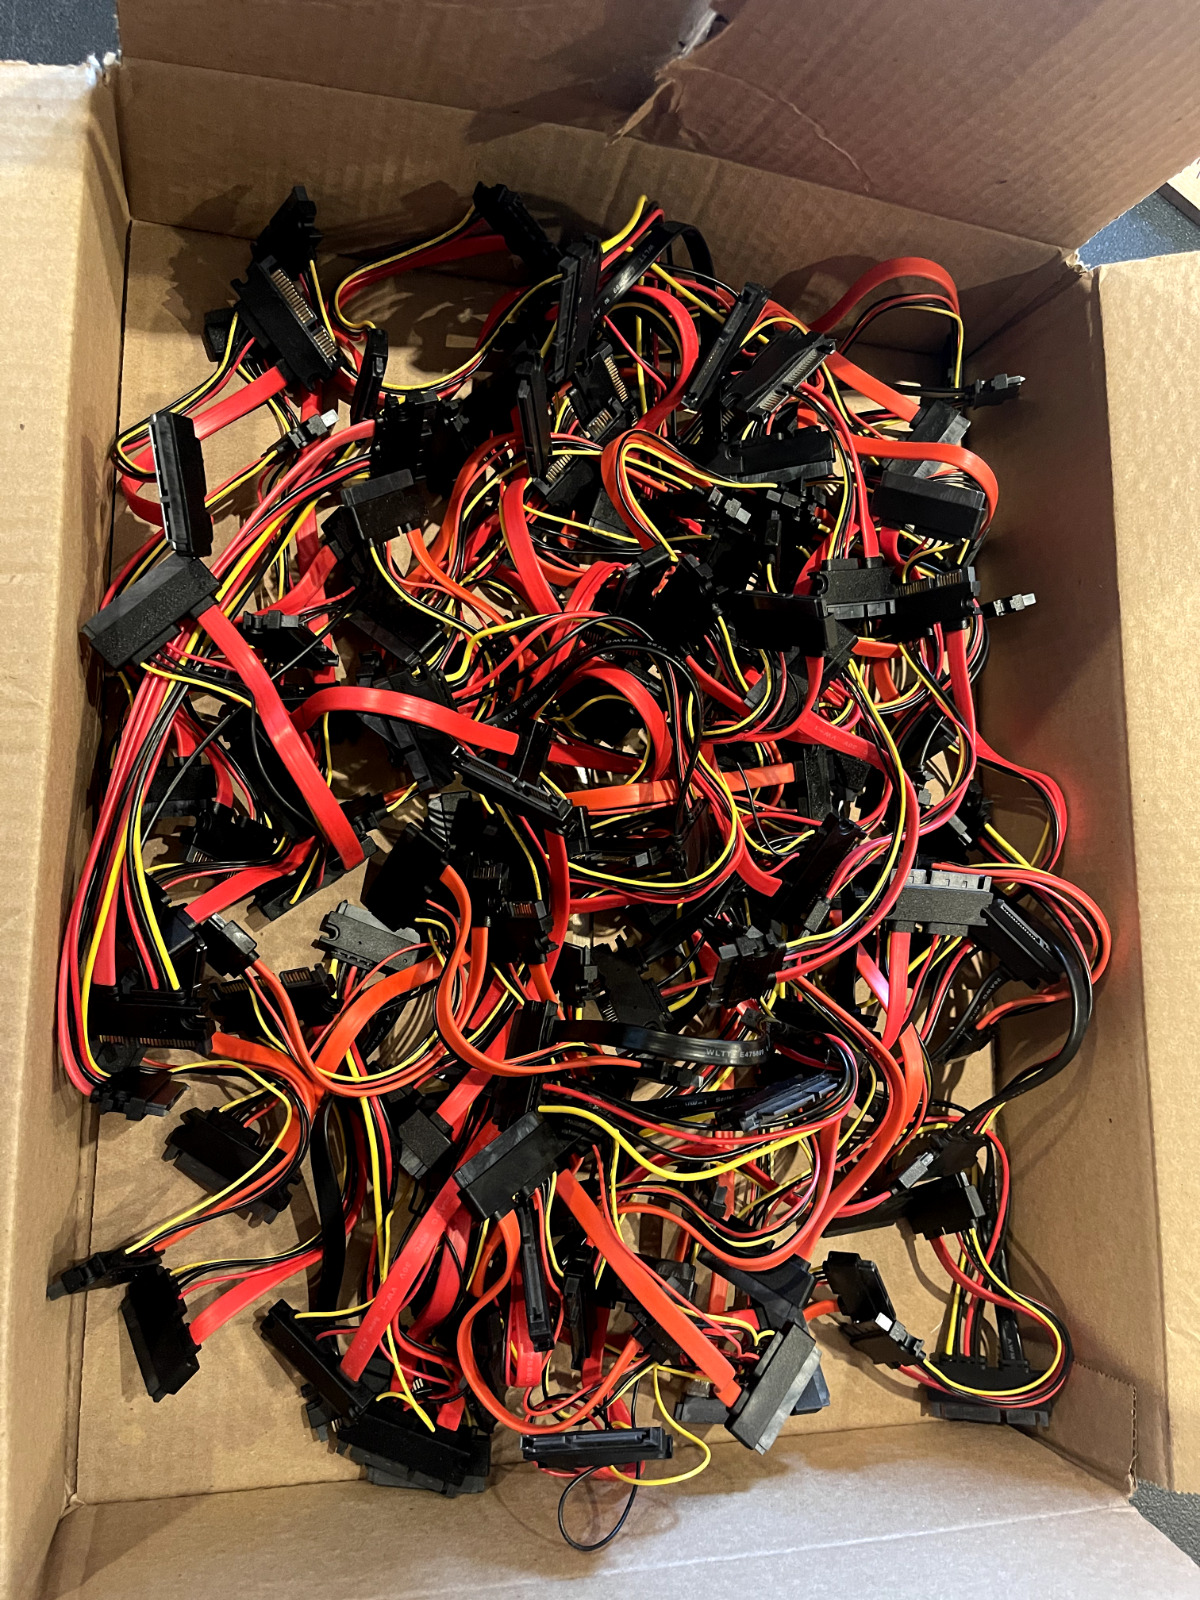 Lot of 75 SATA cables, 7\